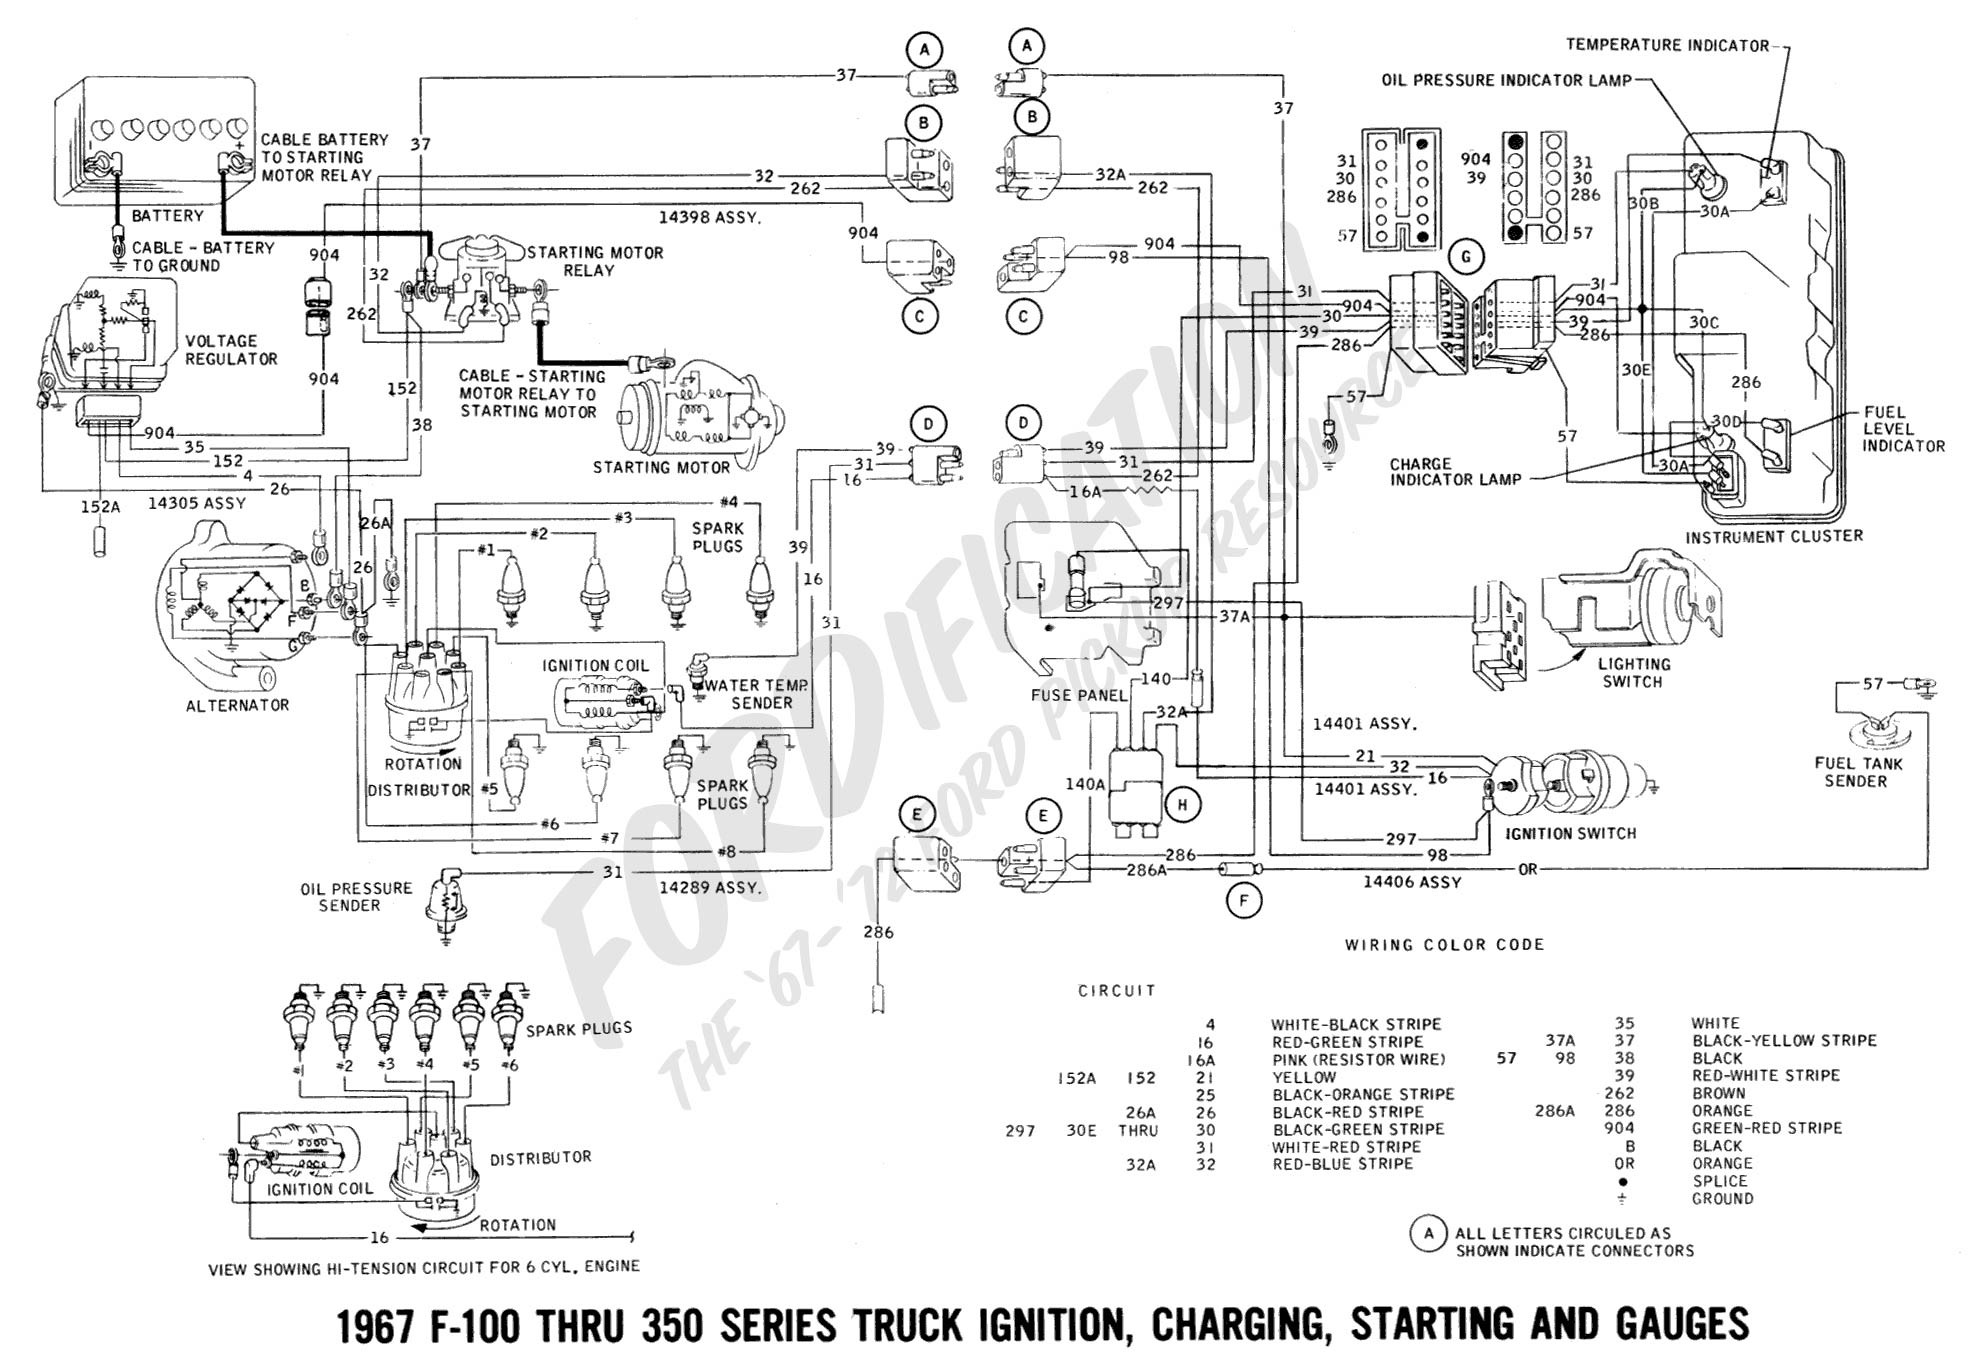 Ford F750 Wiring Diagram from detoxicrecenze.com